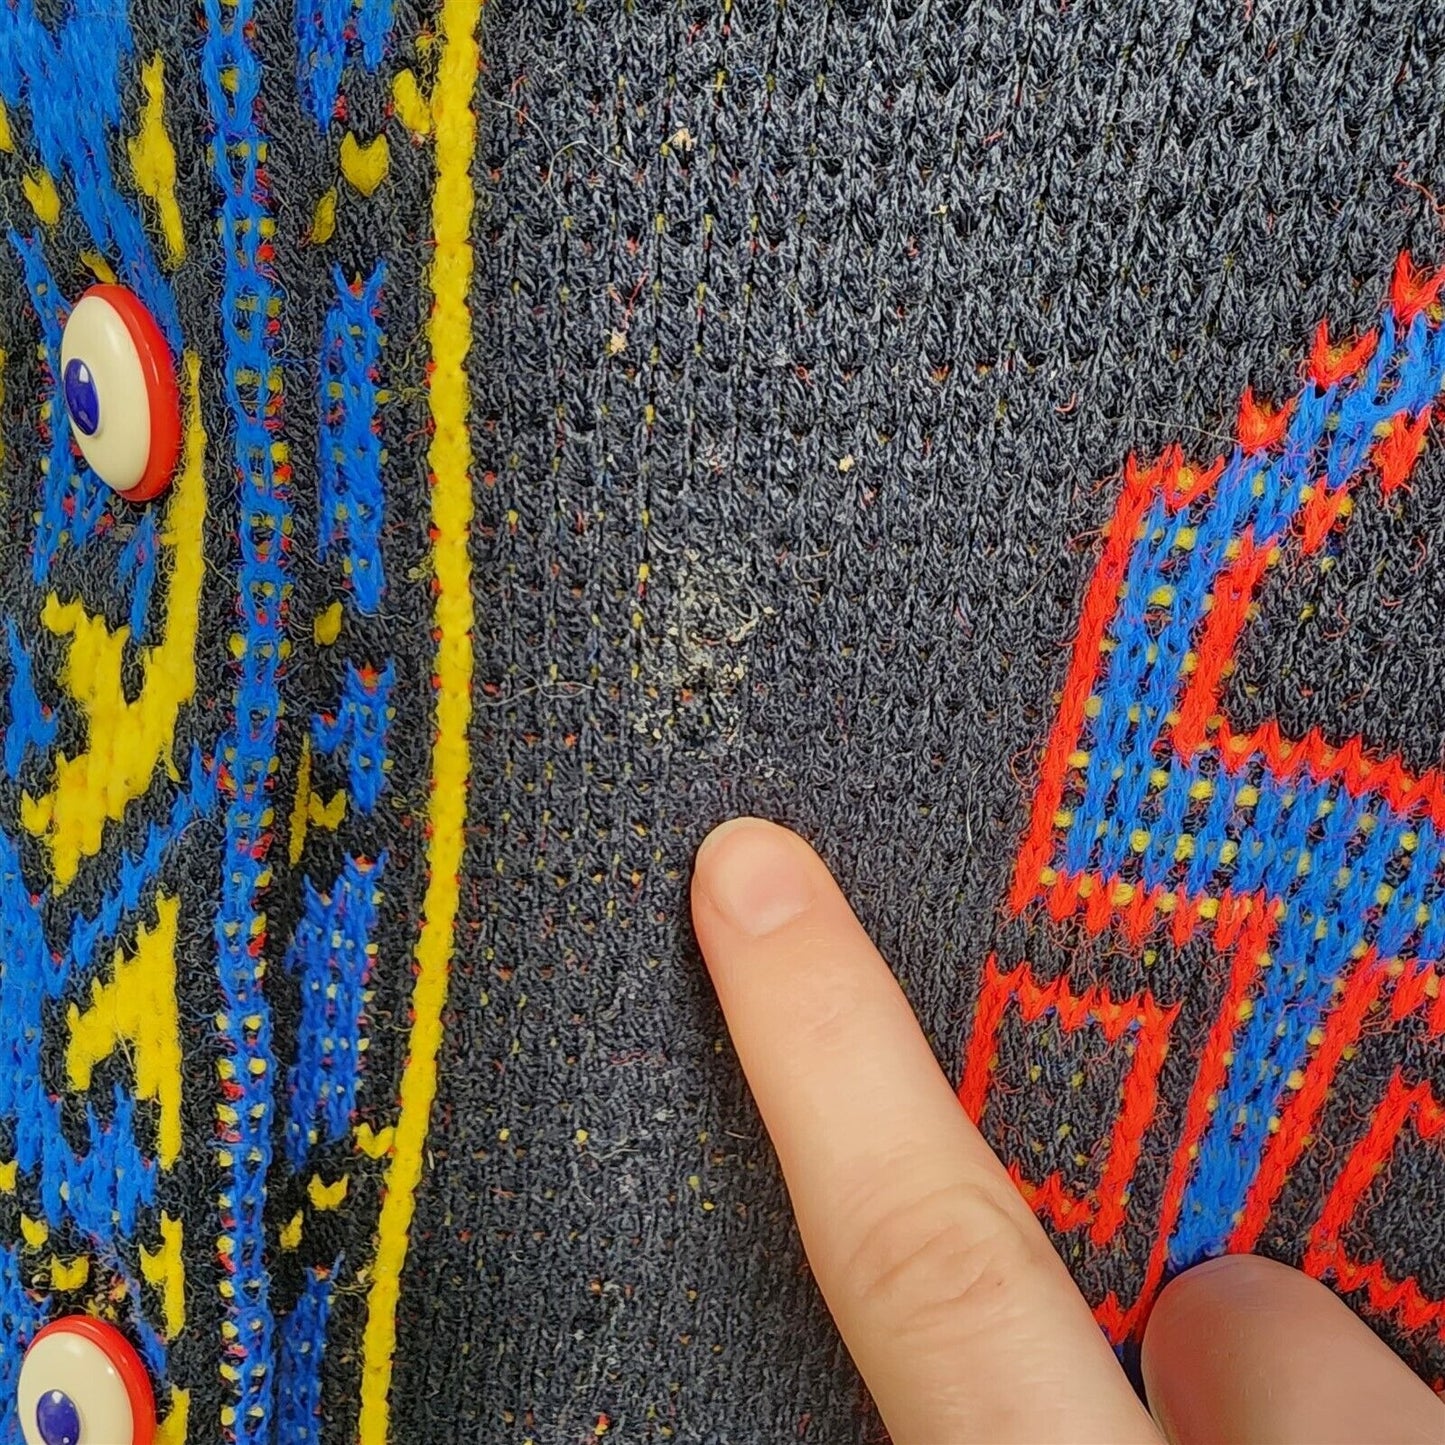 Vintage Sturbridge Black Knit Sweater Cape Poncho Button Front Asian Pattern